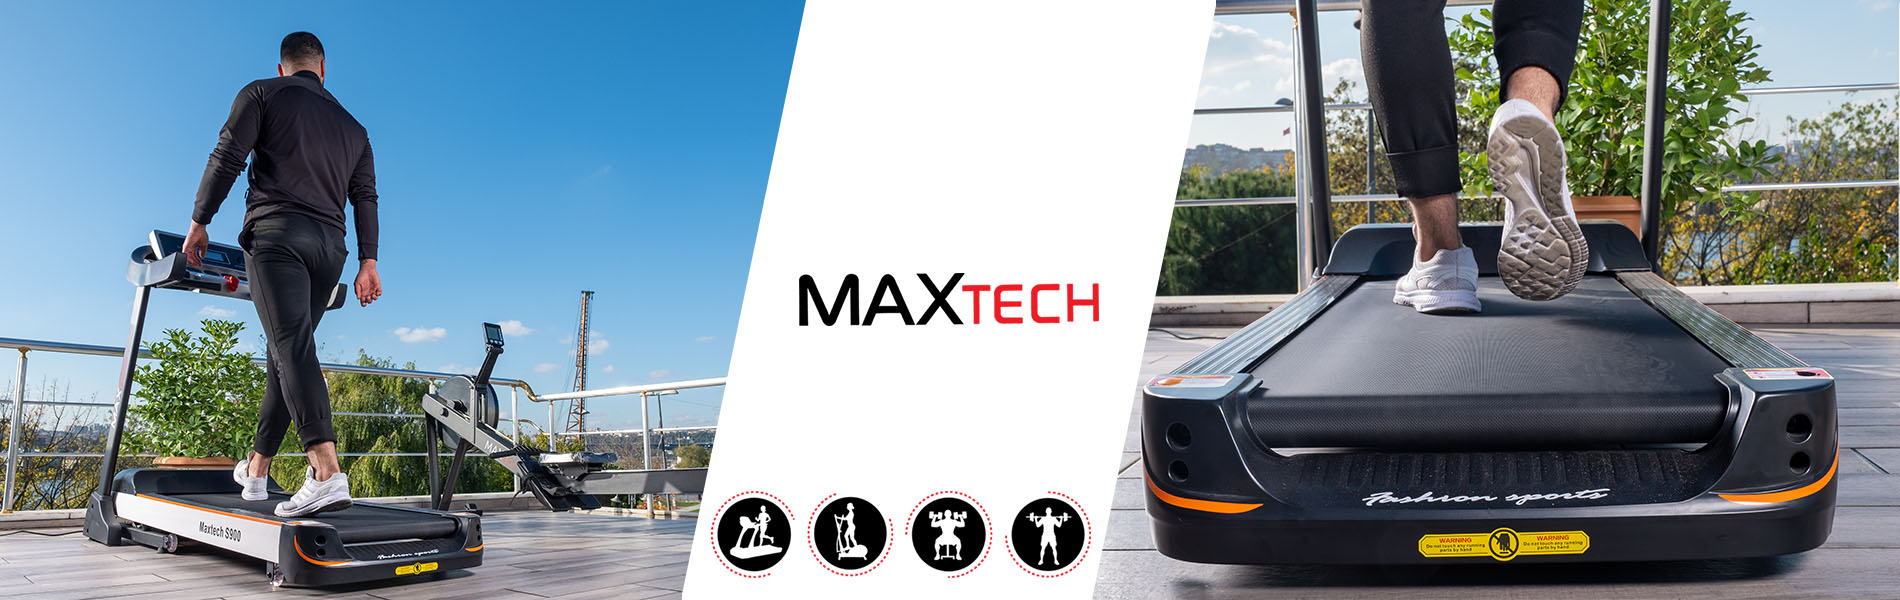 maxtech-fitness-ekipmanlari-sl-2021-1